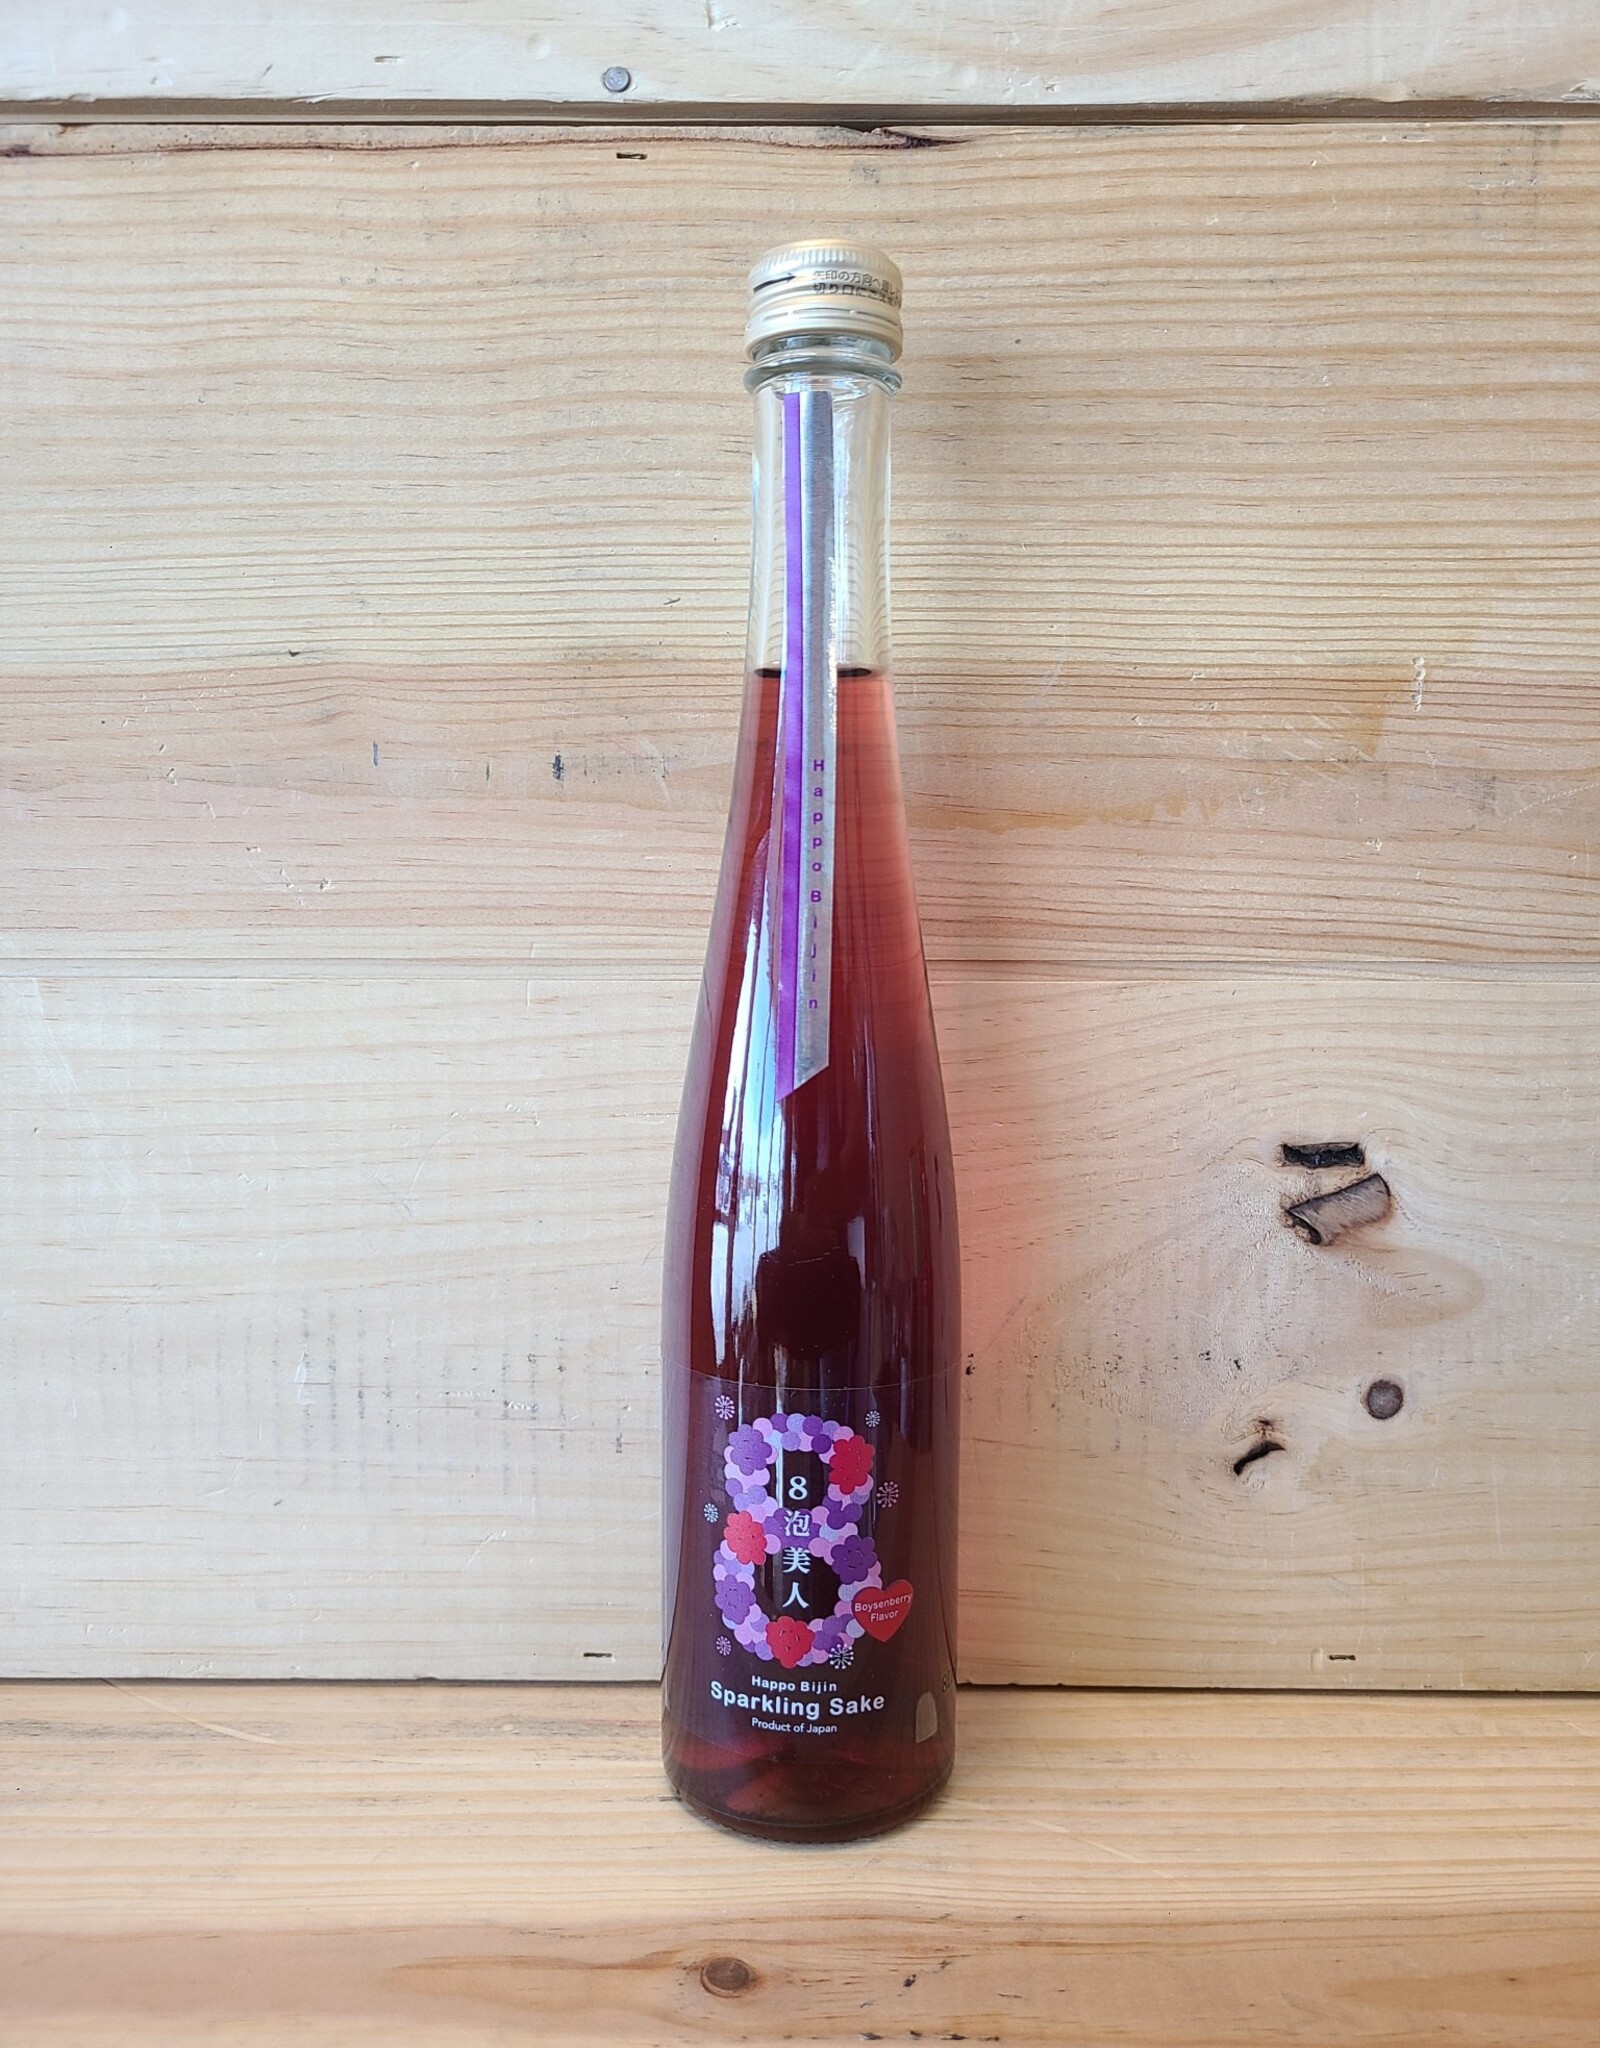 Happo Bijin Boysenberry Sparkling Sake